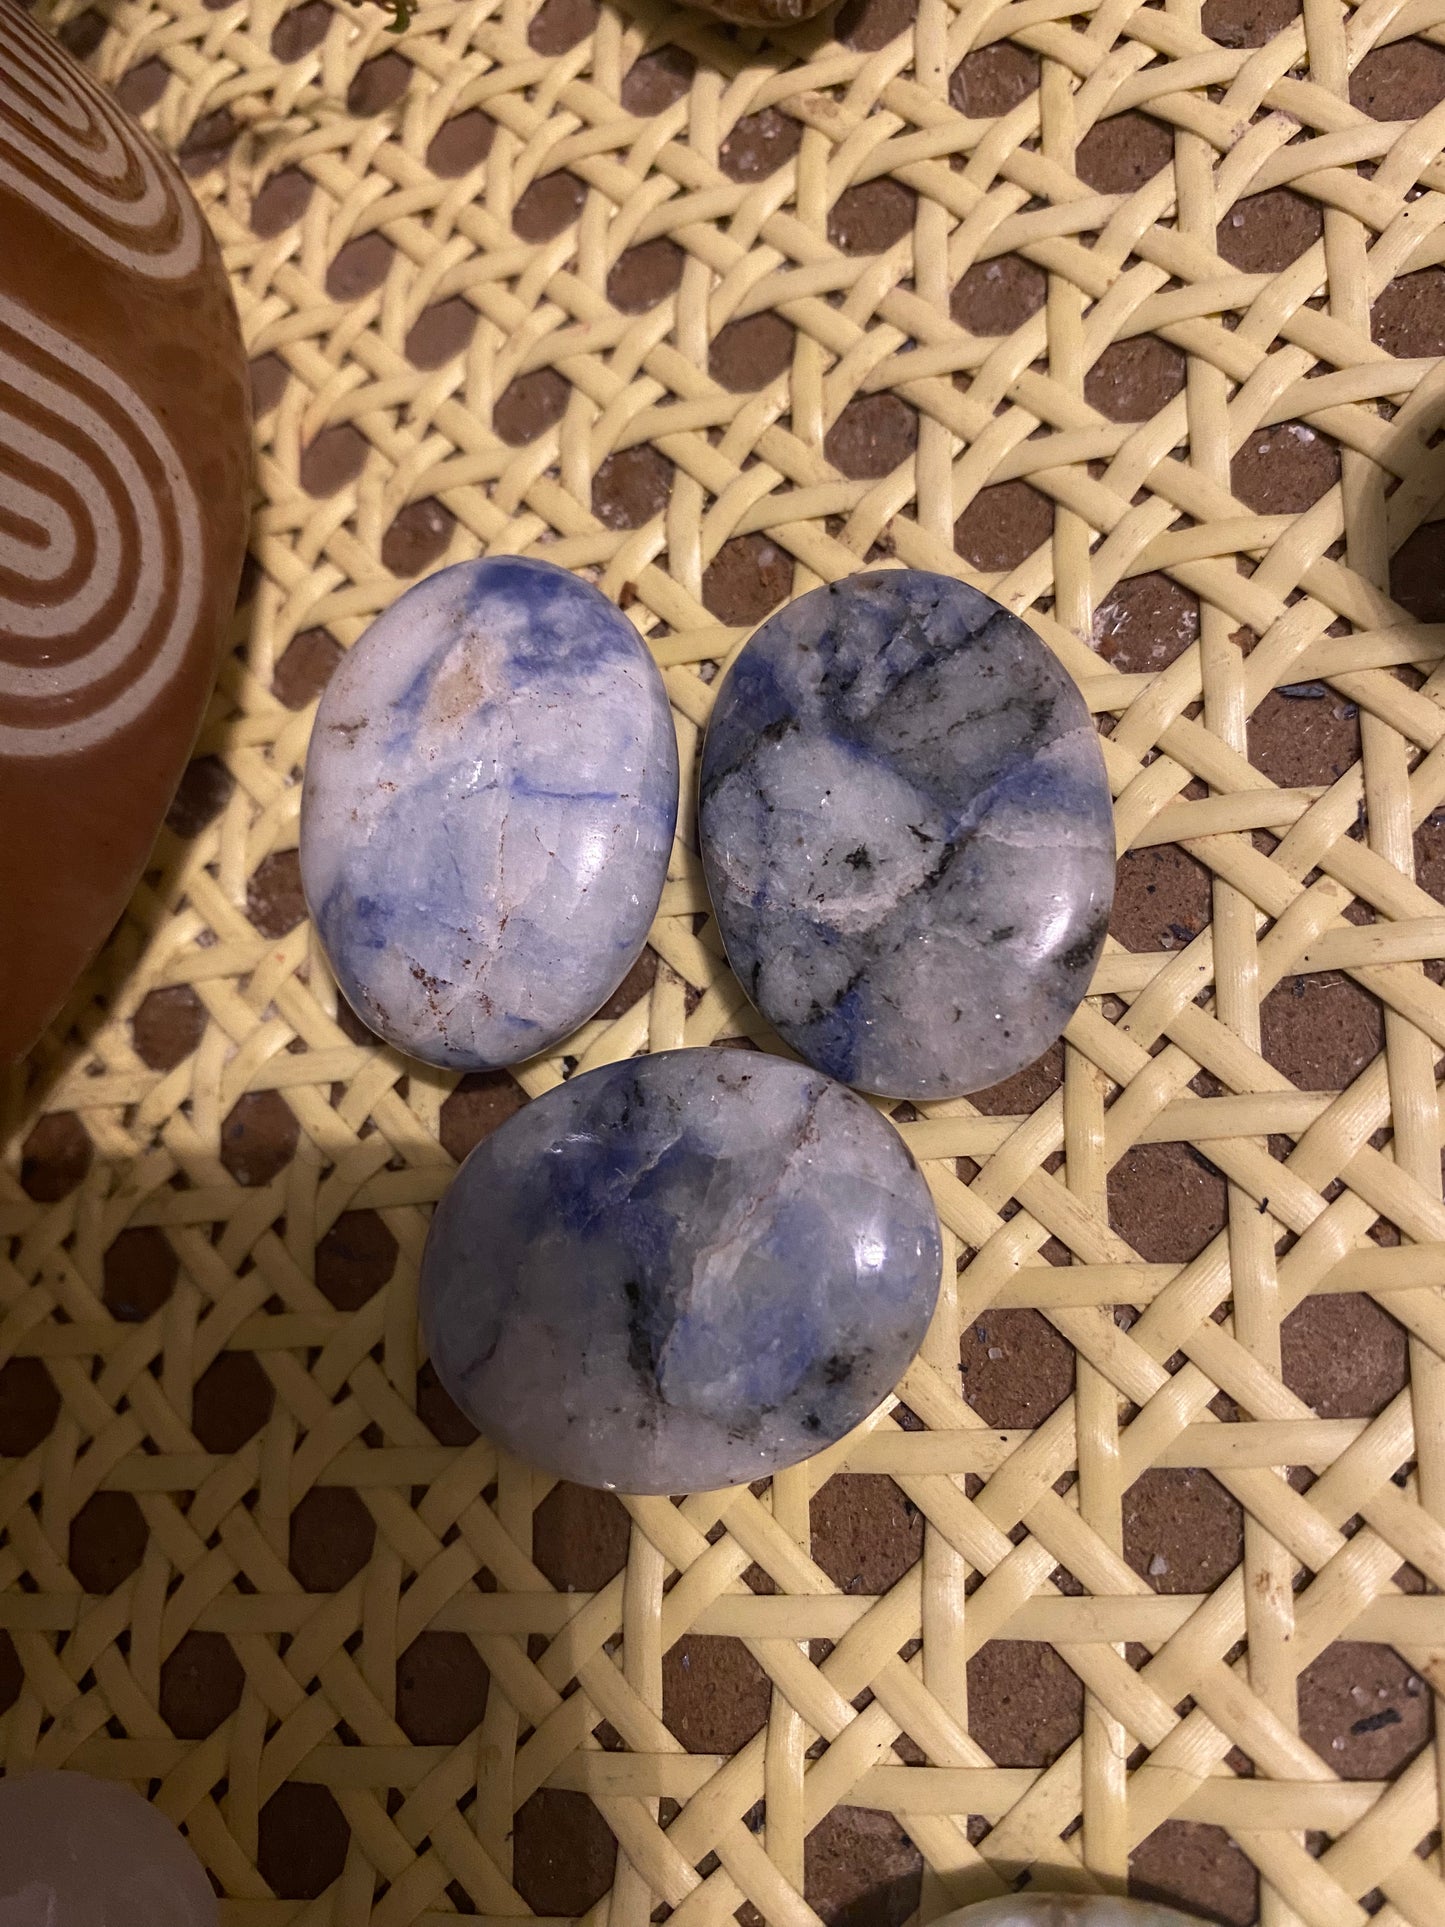 Afghanite worry stone